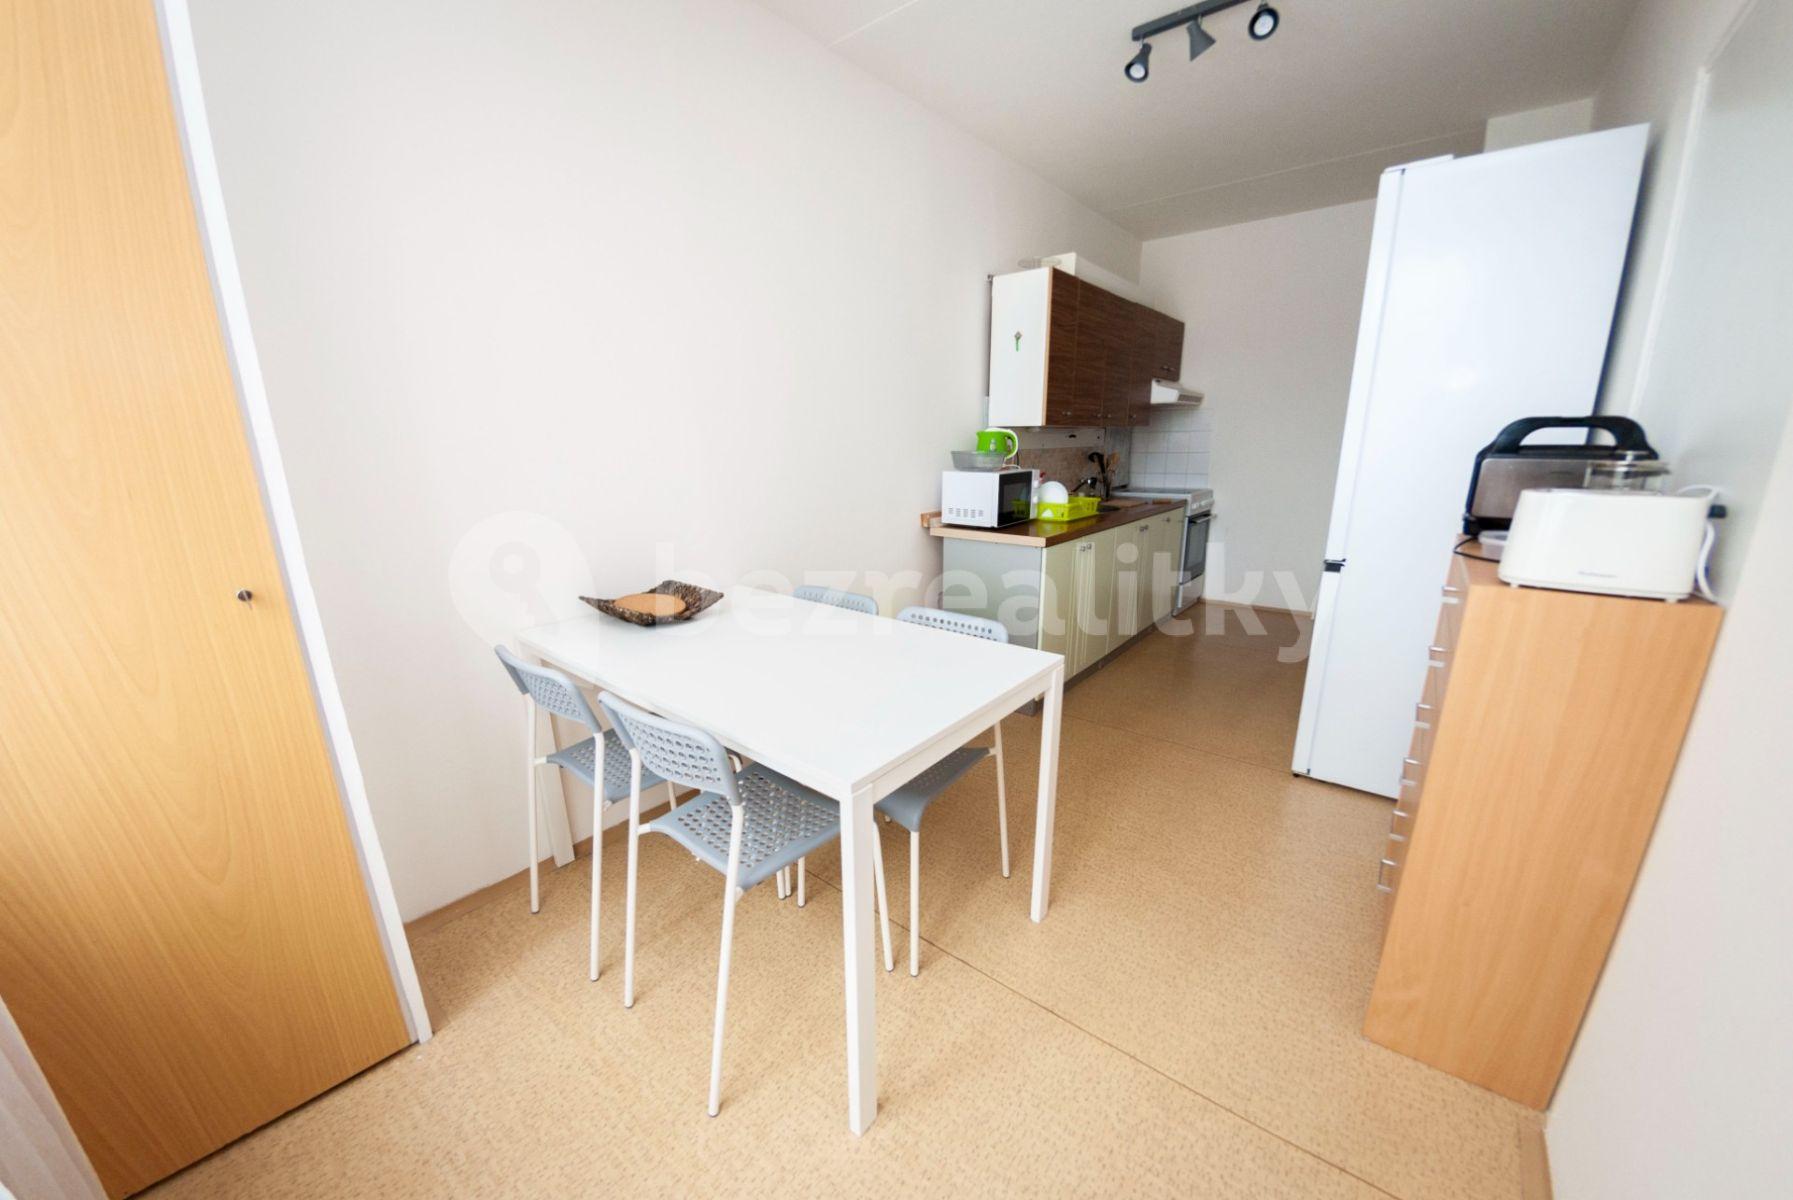 4 bedroom flat to rent, 65 m², Oblá, Brno, Jihomoravský Region